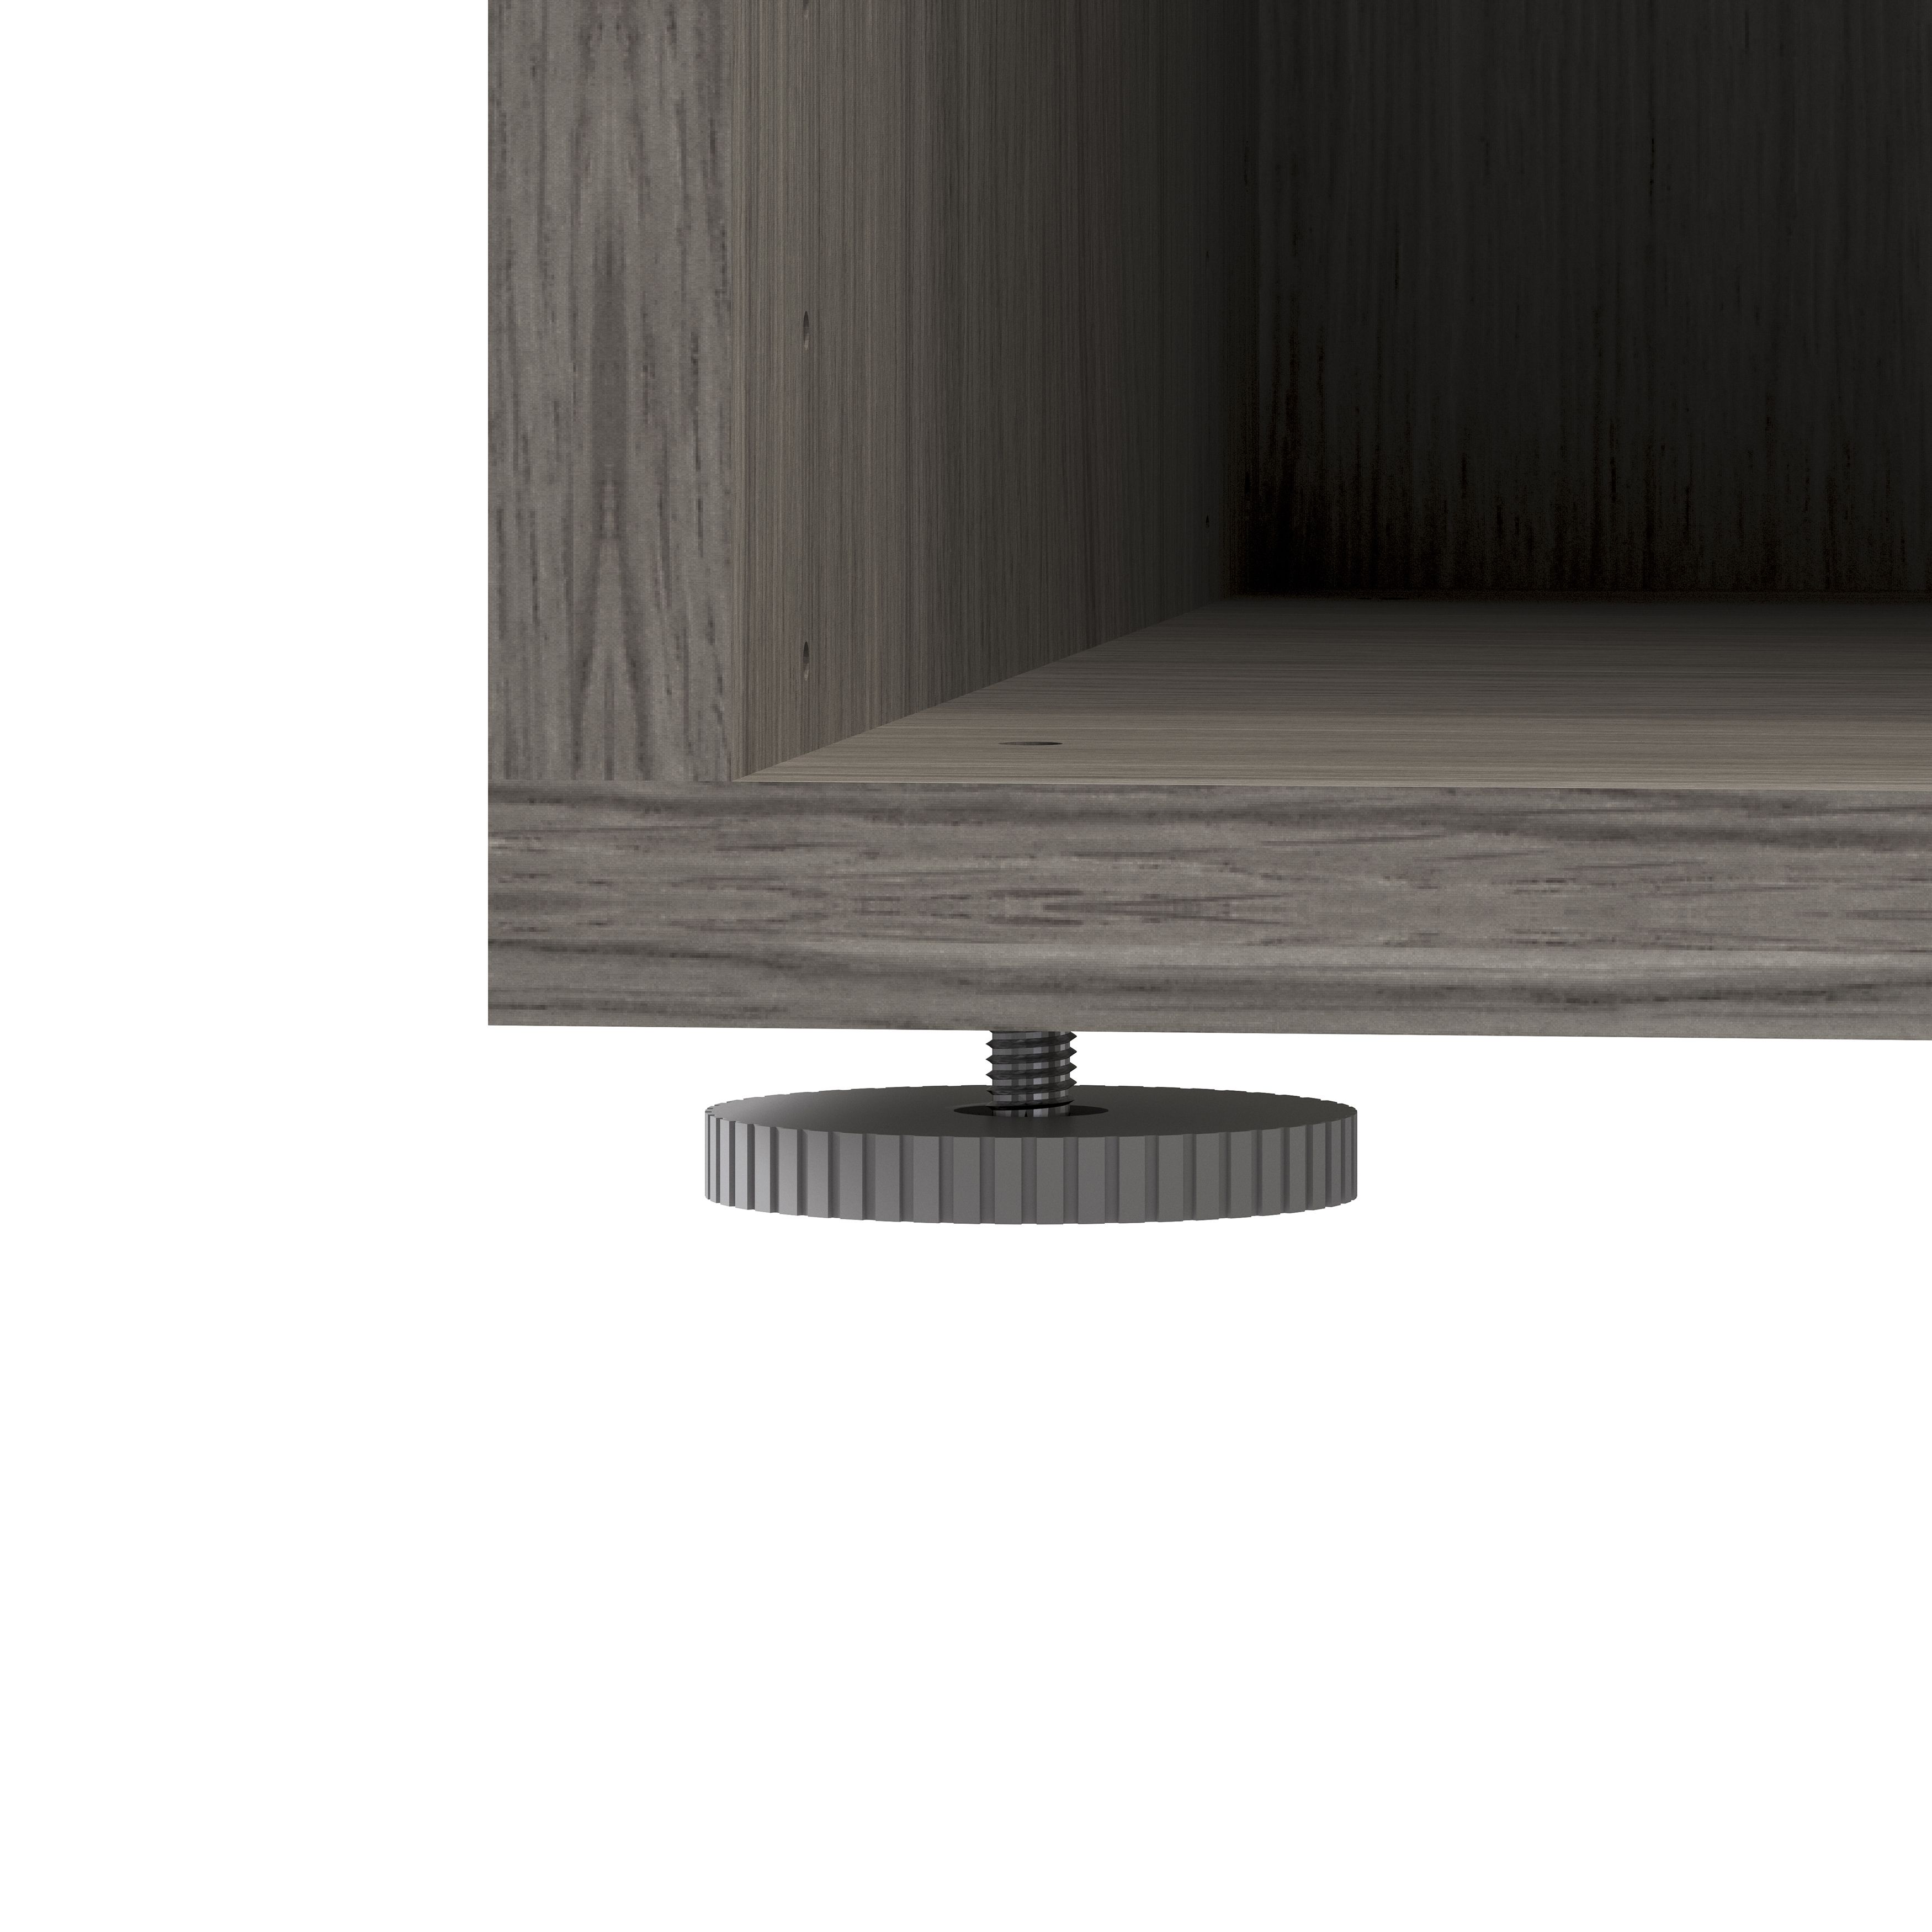 GoodHome Atomia Grey oak effect Modular furniture cabinet, (H)2250mm (W)500mm (D)580mm